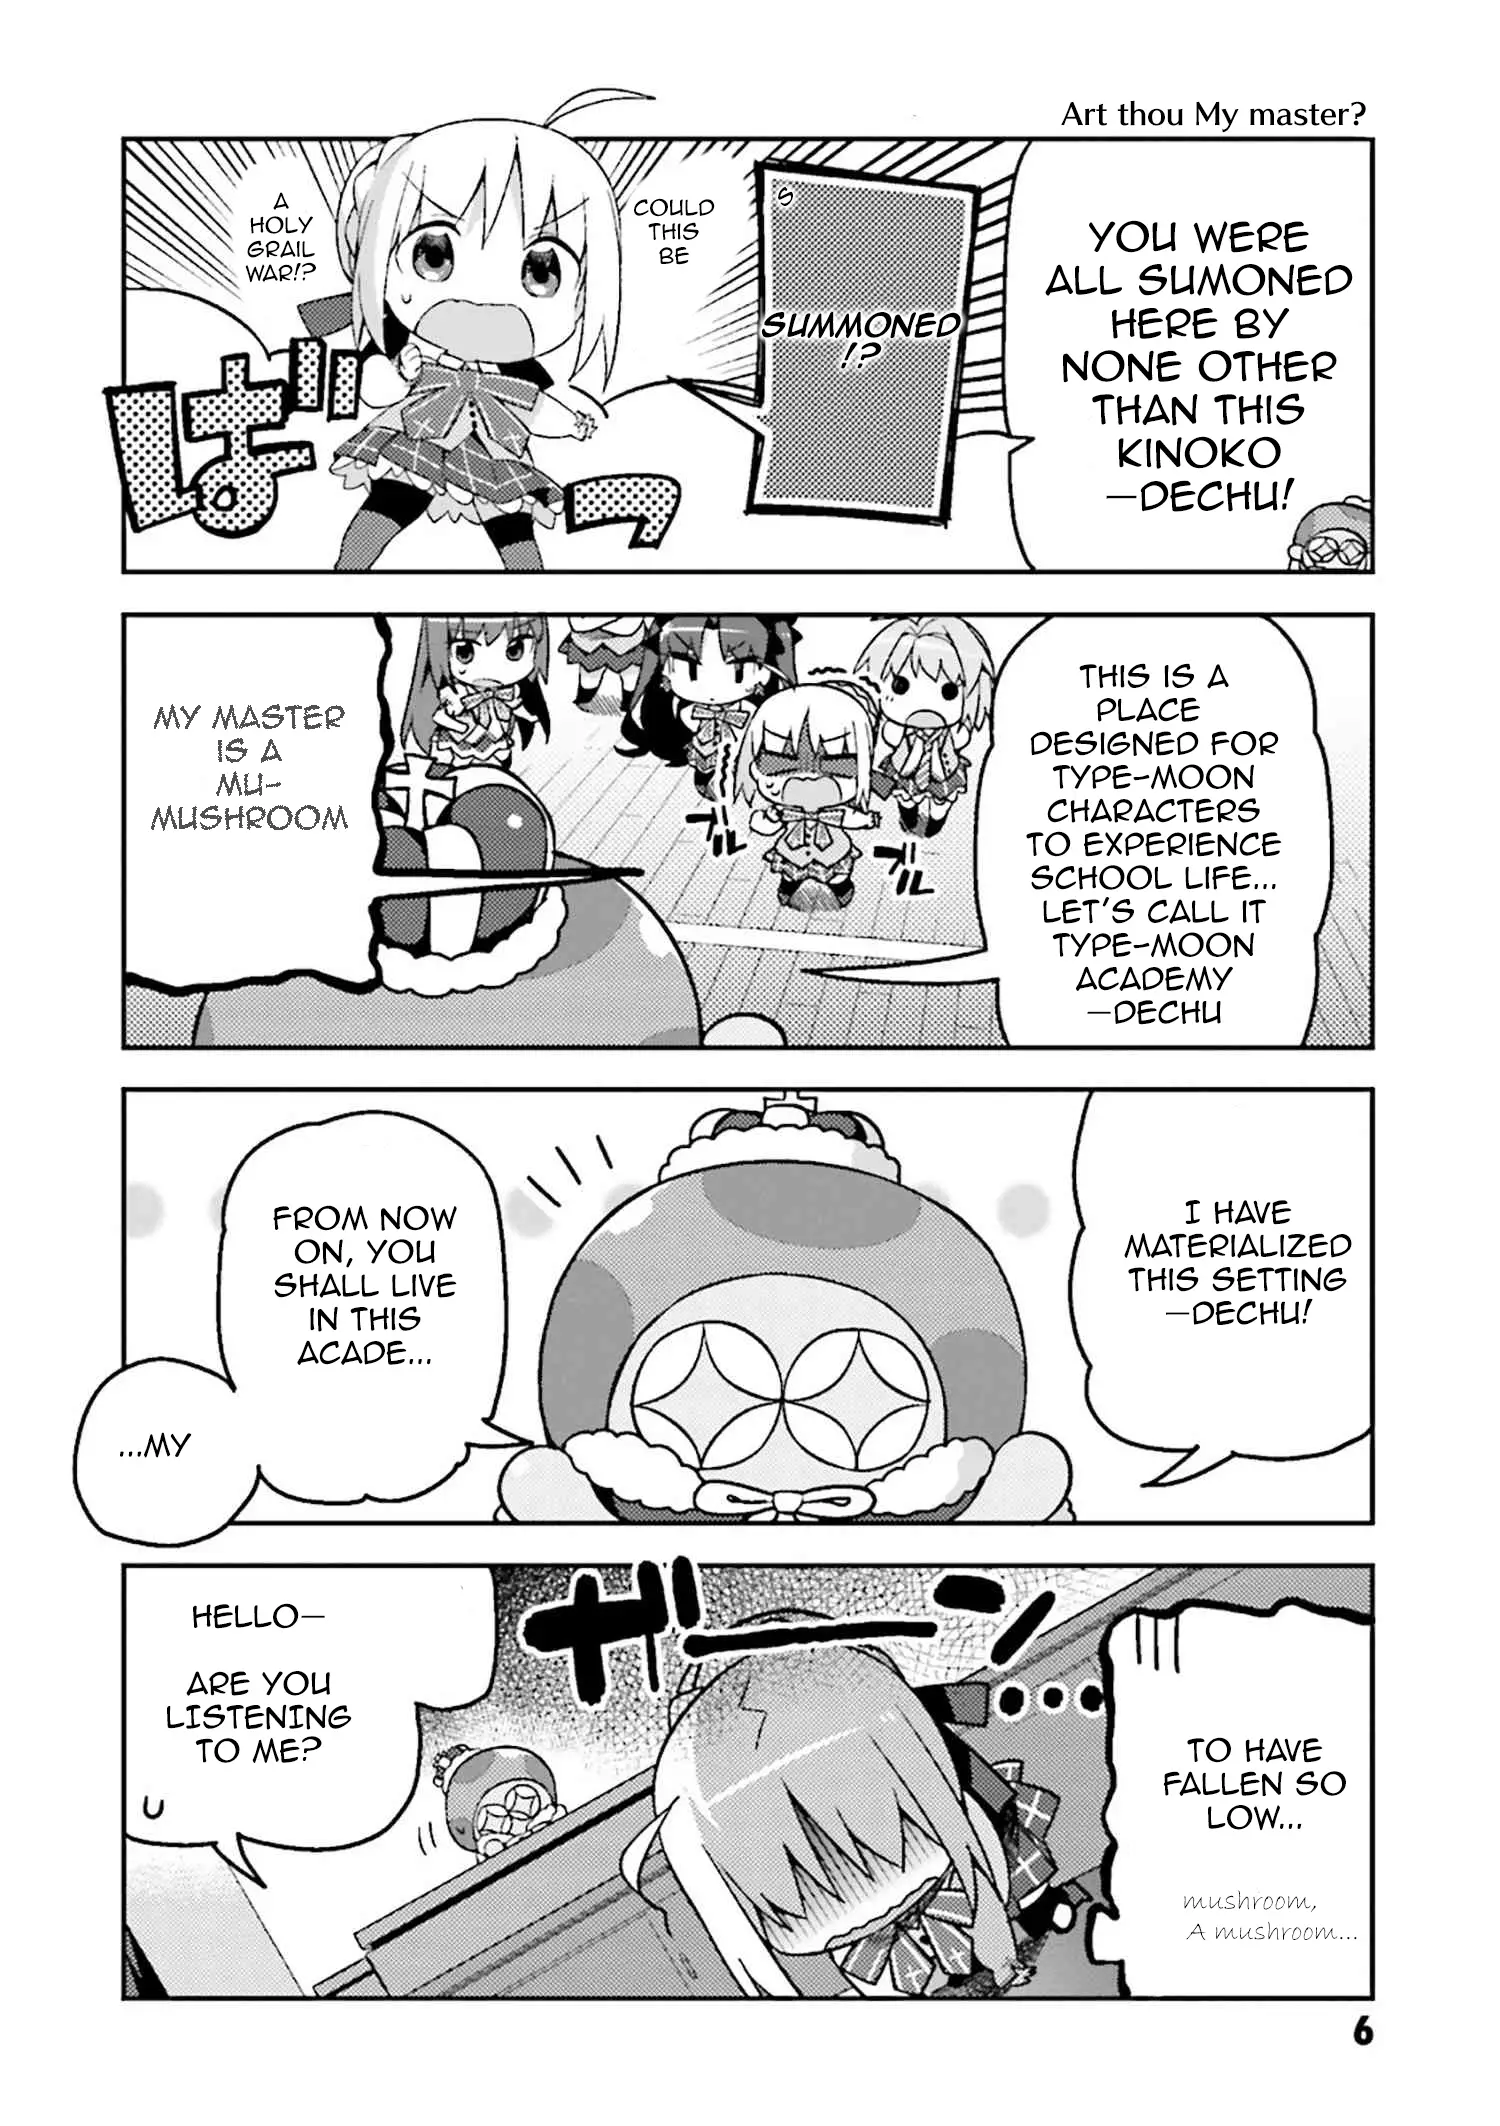 Type-Moon Gakuen - Chibi Chuki! - 1 page 8-8c69ec97